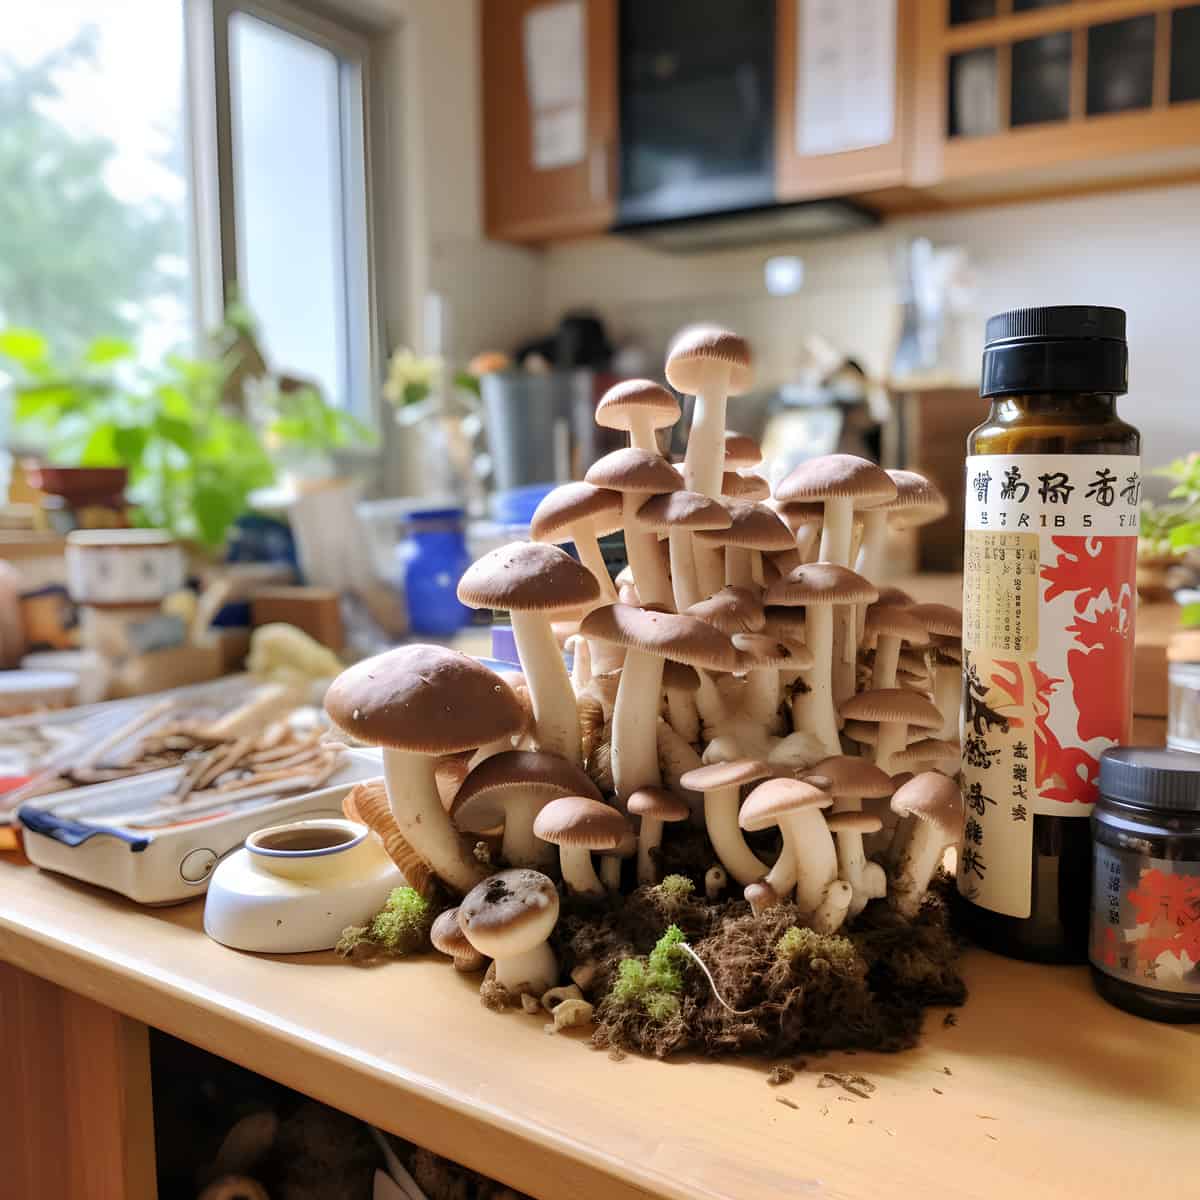 Bunashimeji Brown Variety on a kitchen counter